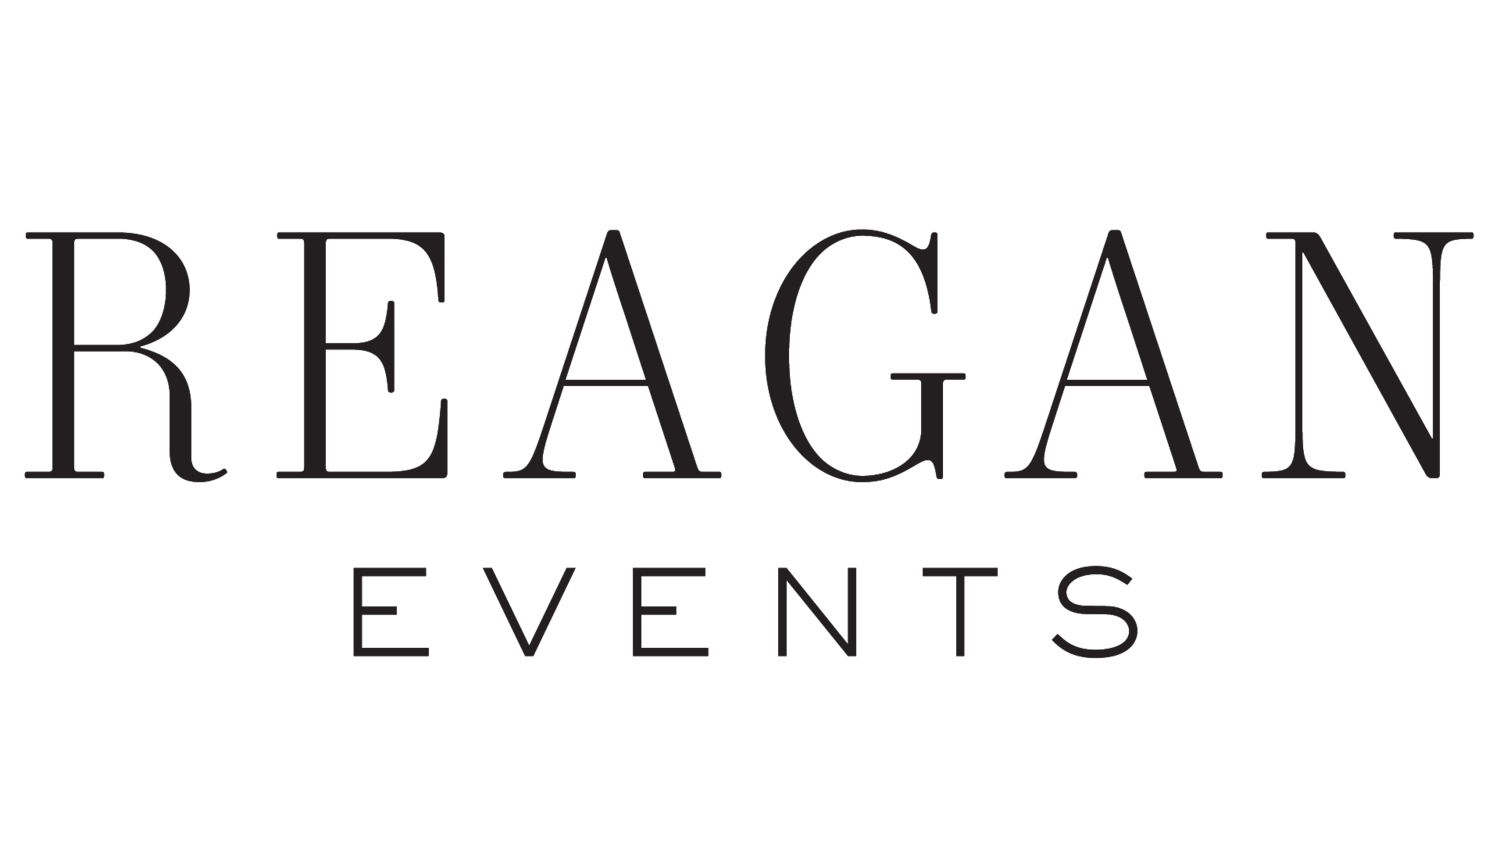 Reagan Events